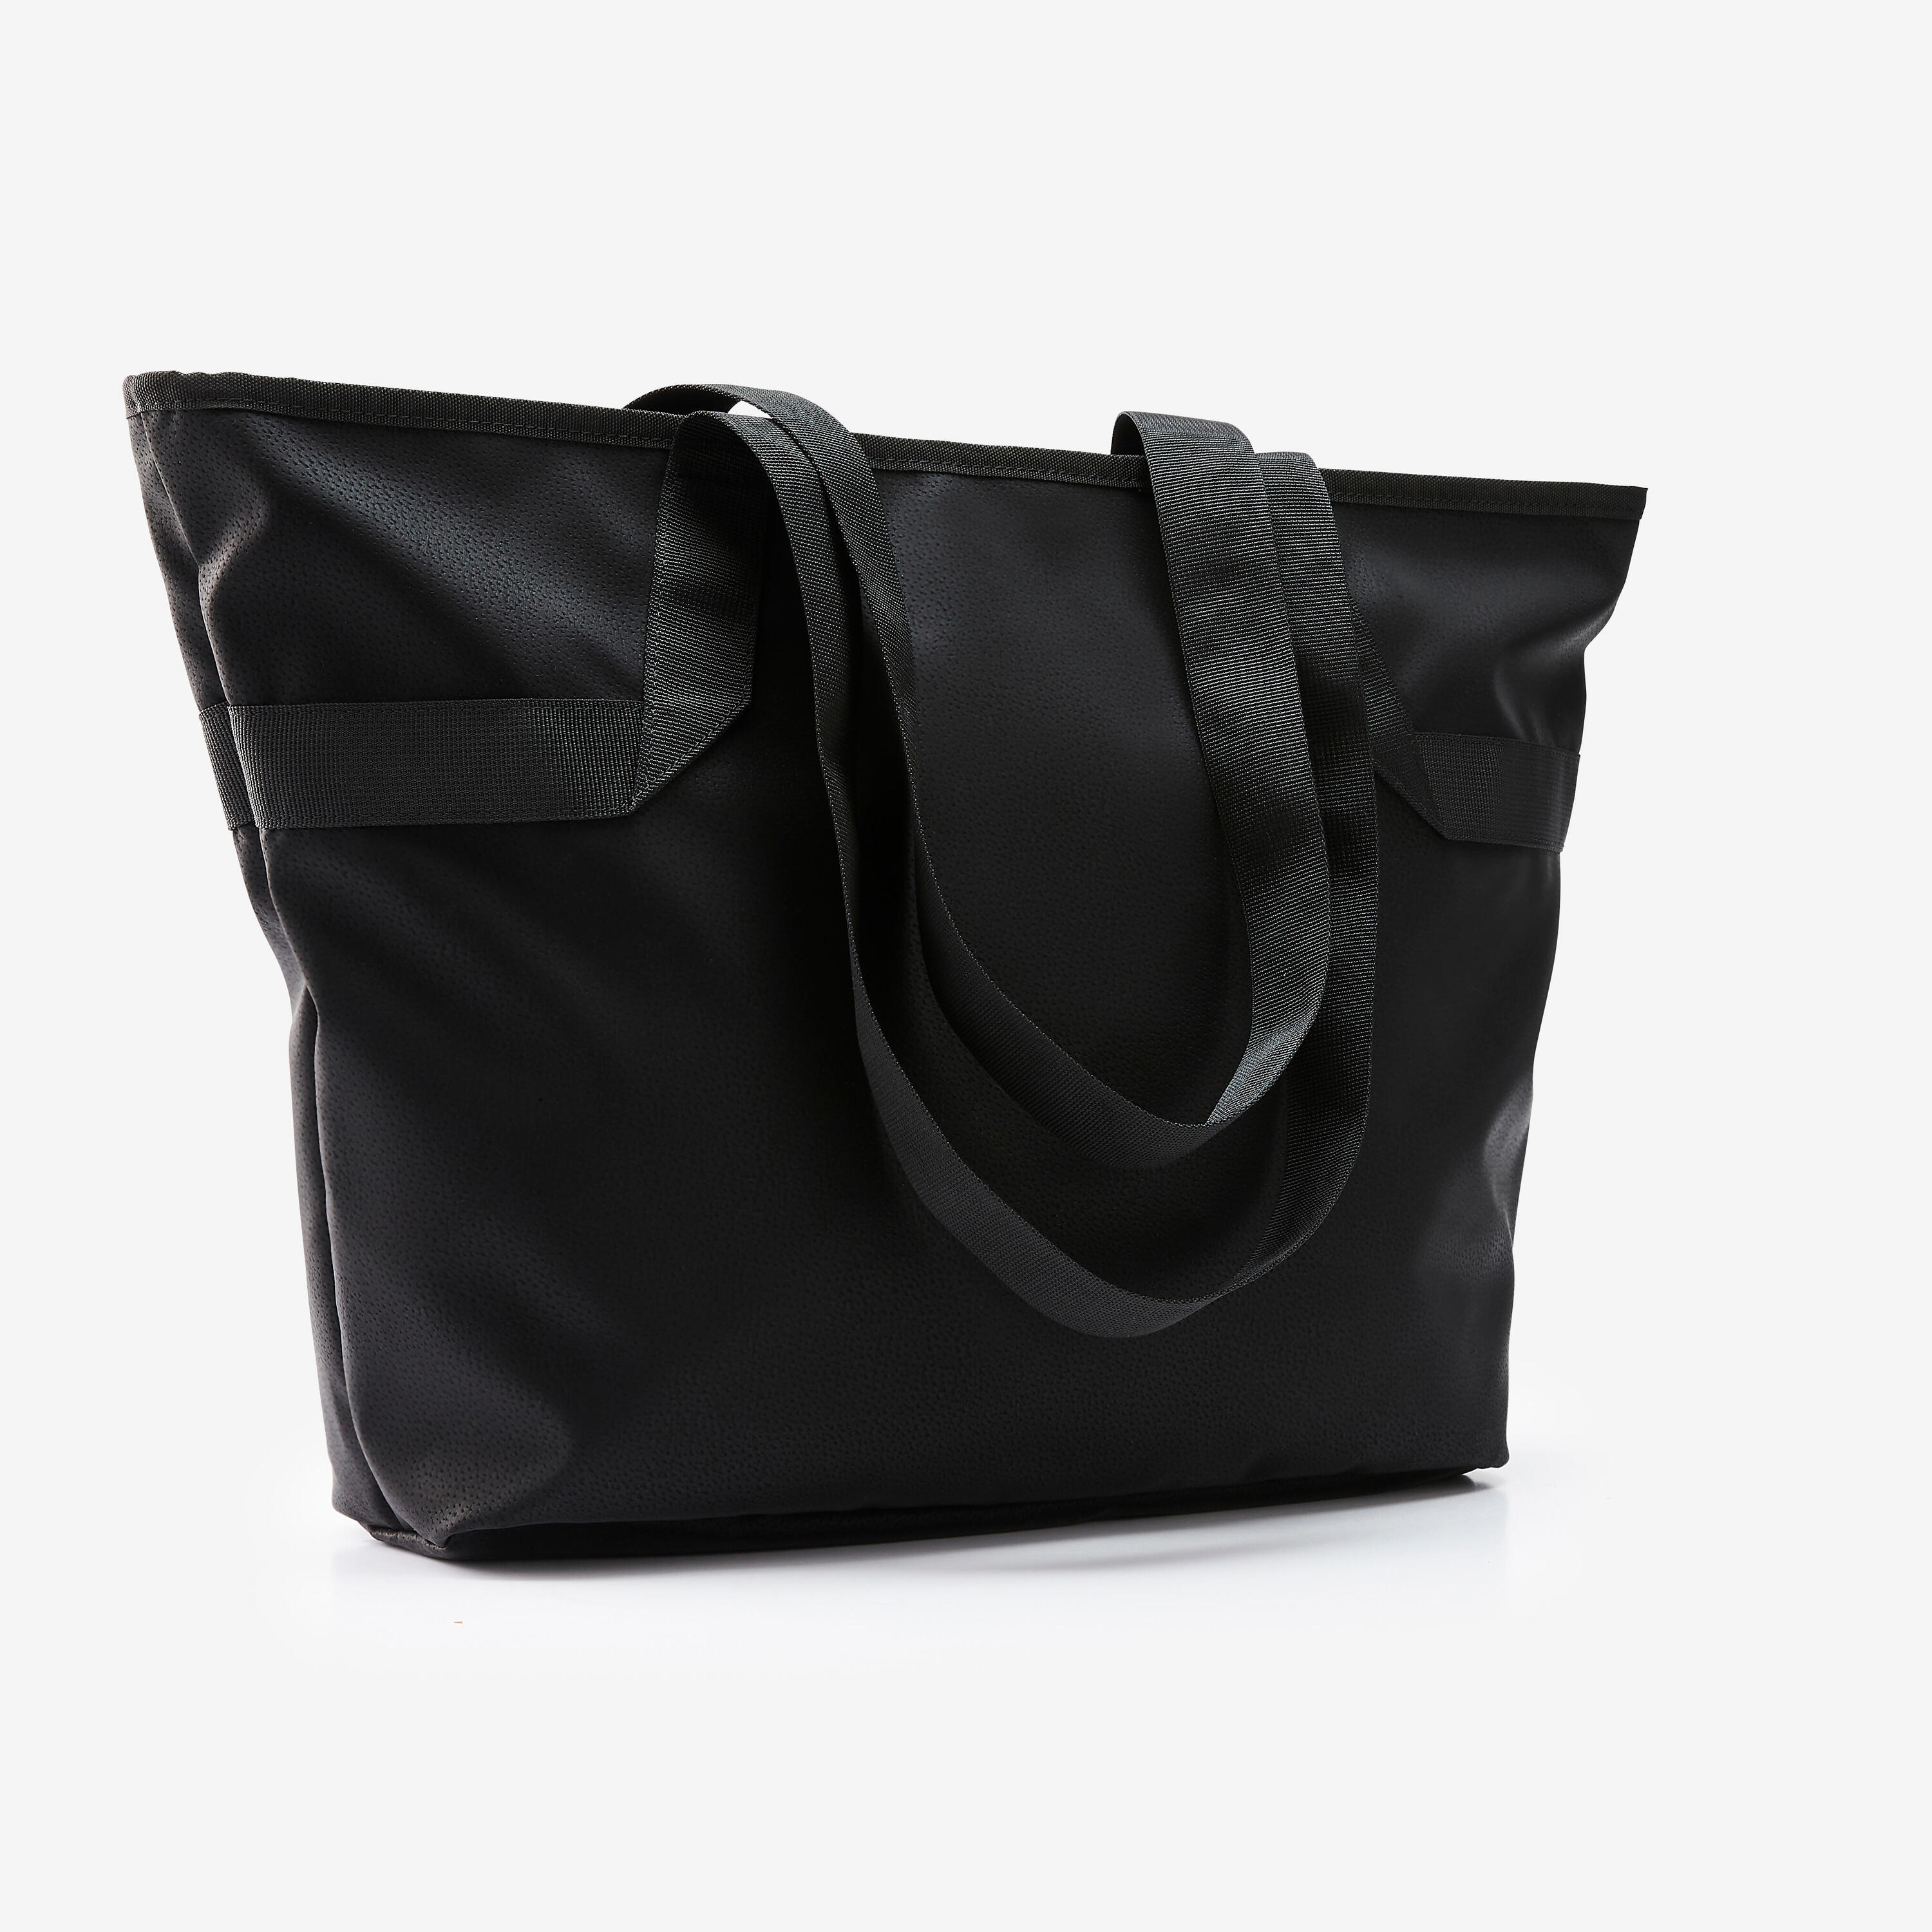 25 L Leather Look Sport Tote Bag - Black 2/6